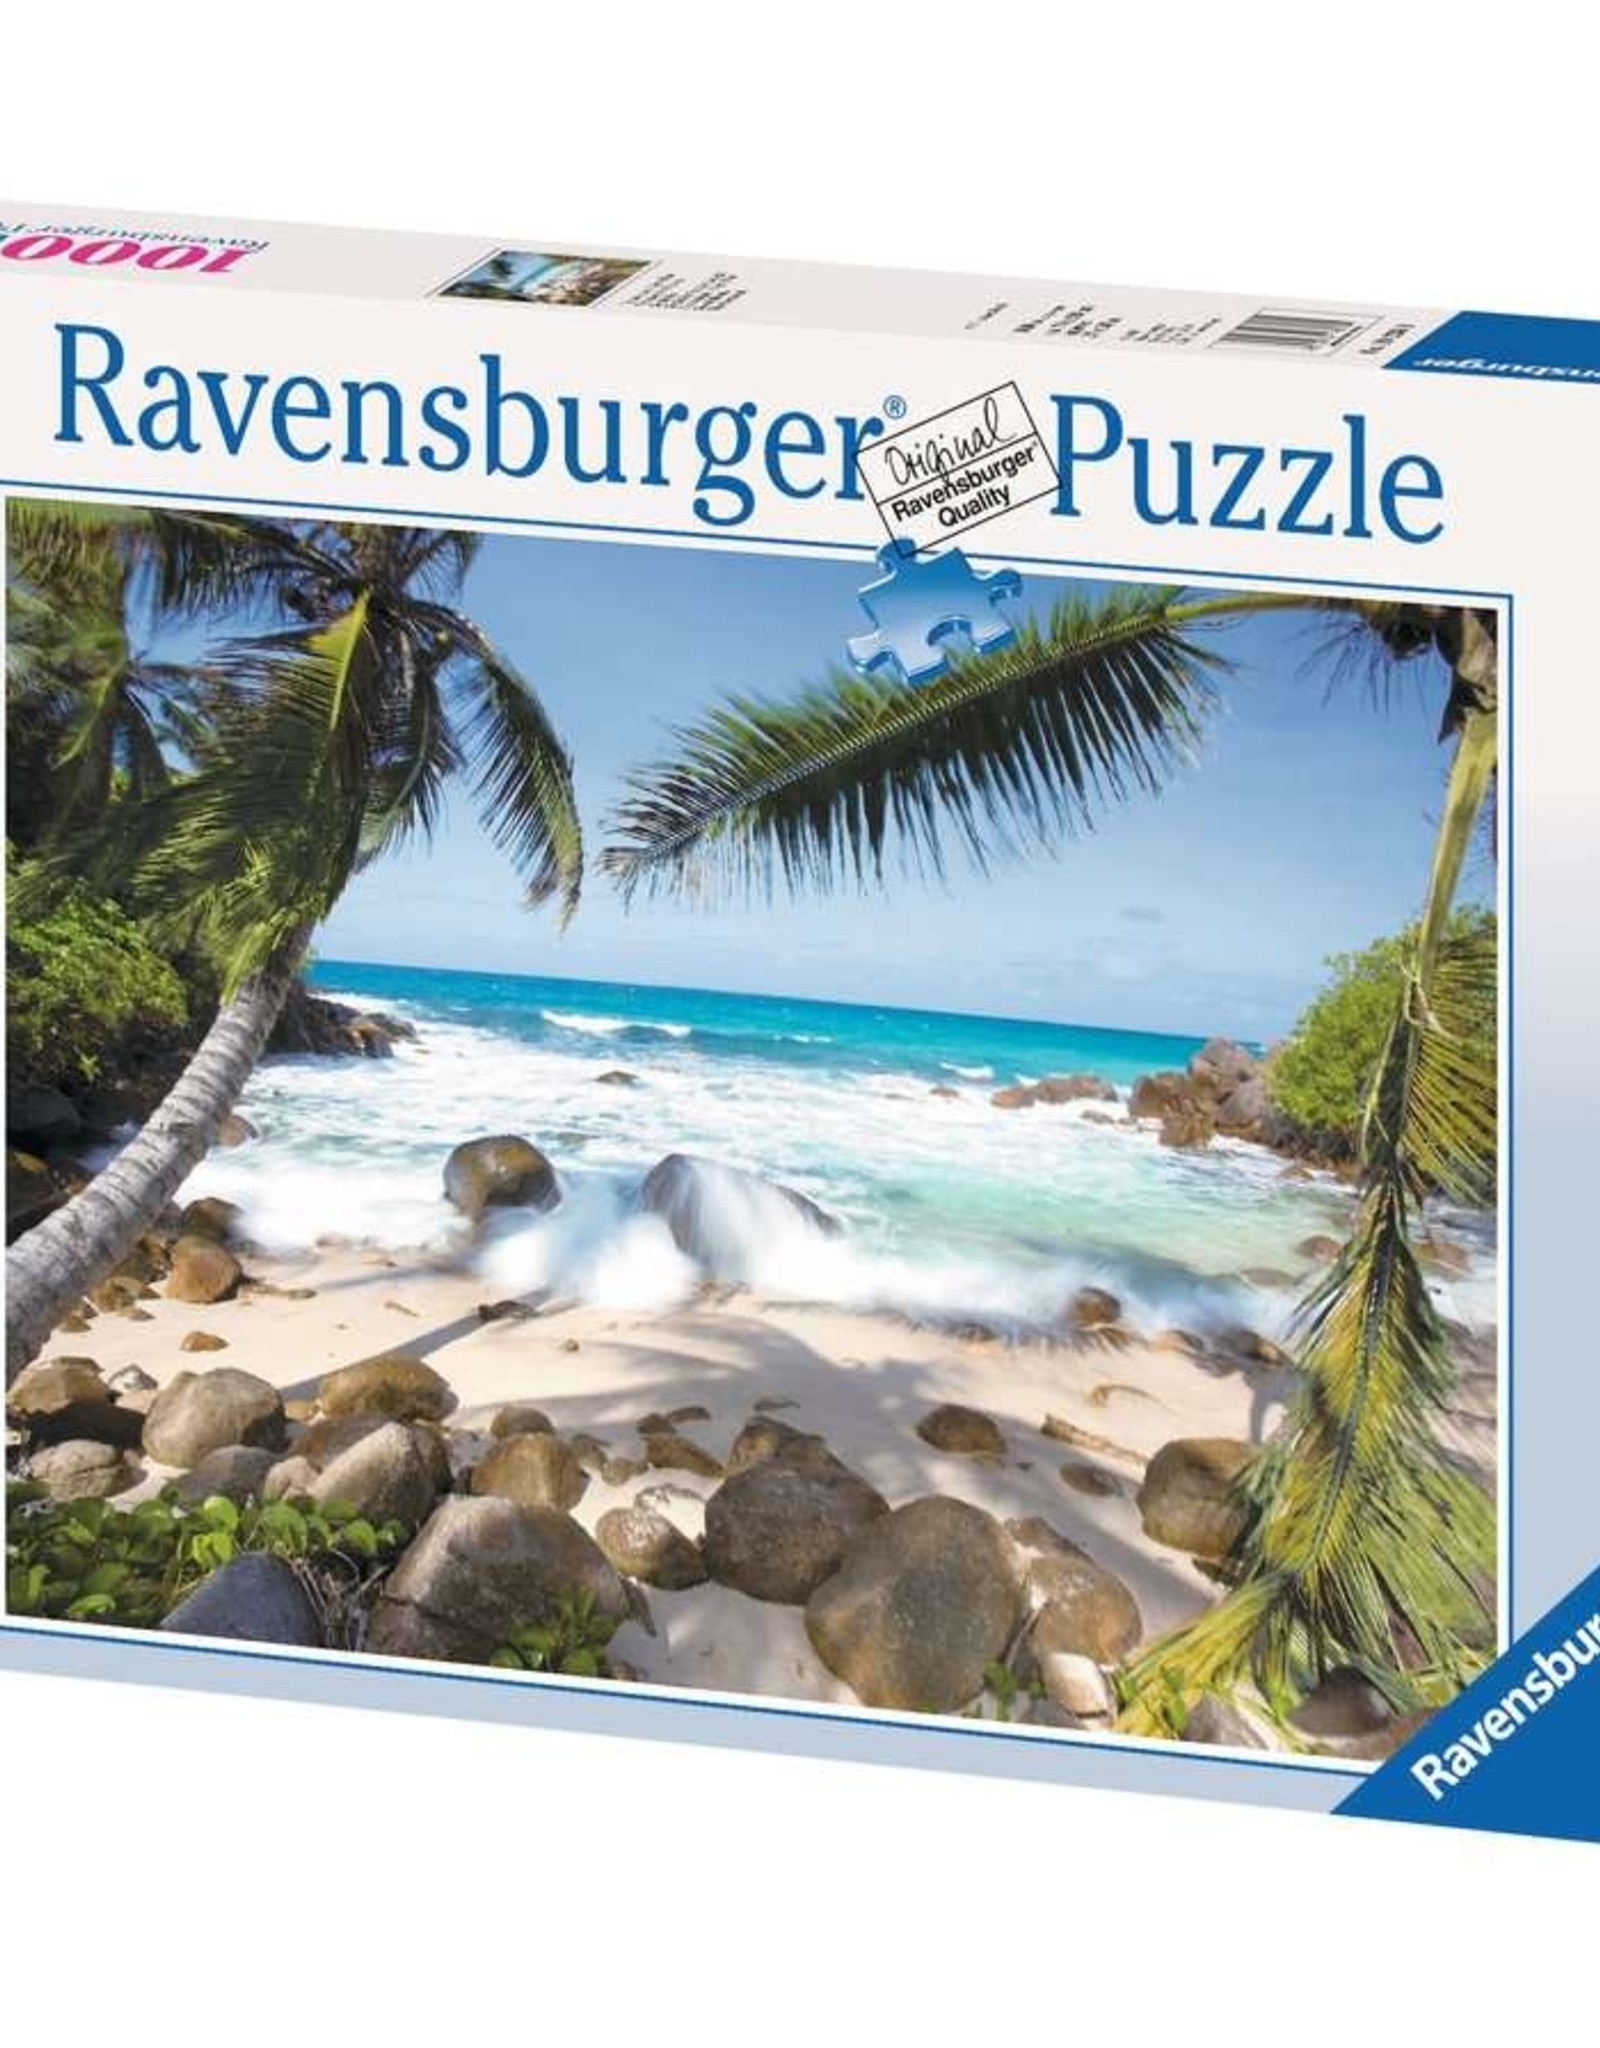 Ravensburger Puzzle 1000 pc: Seaside Beauty